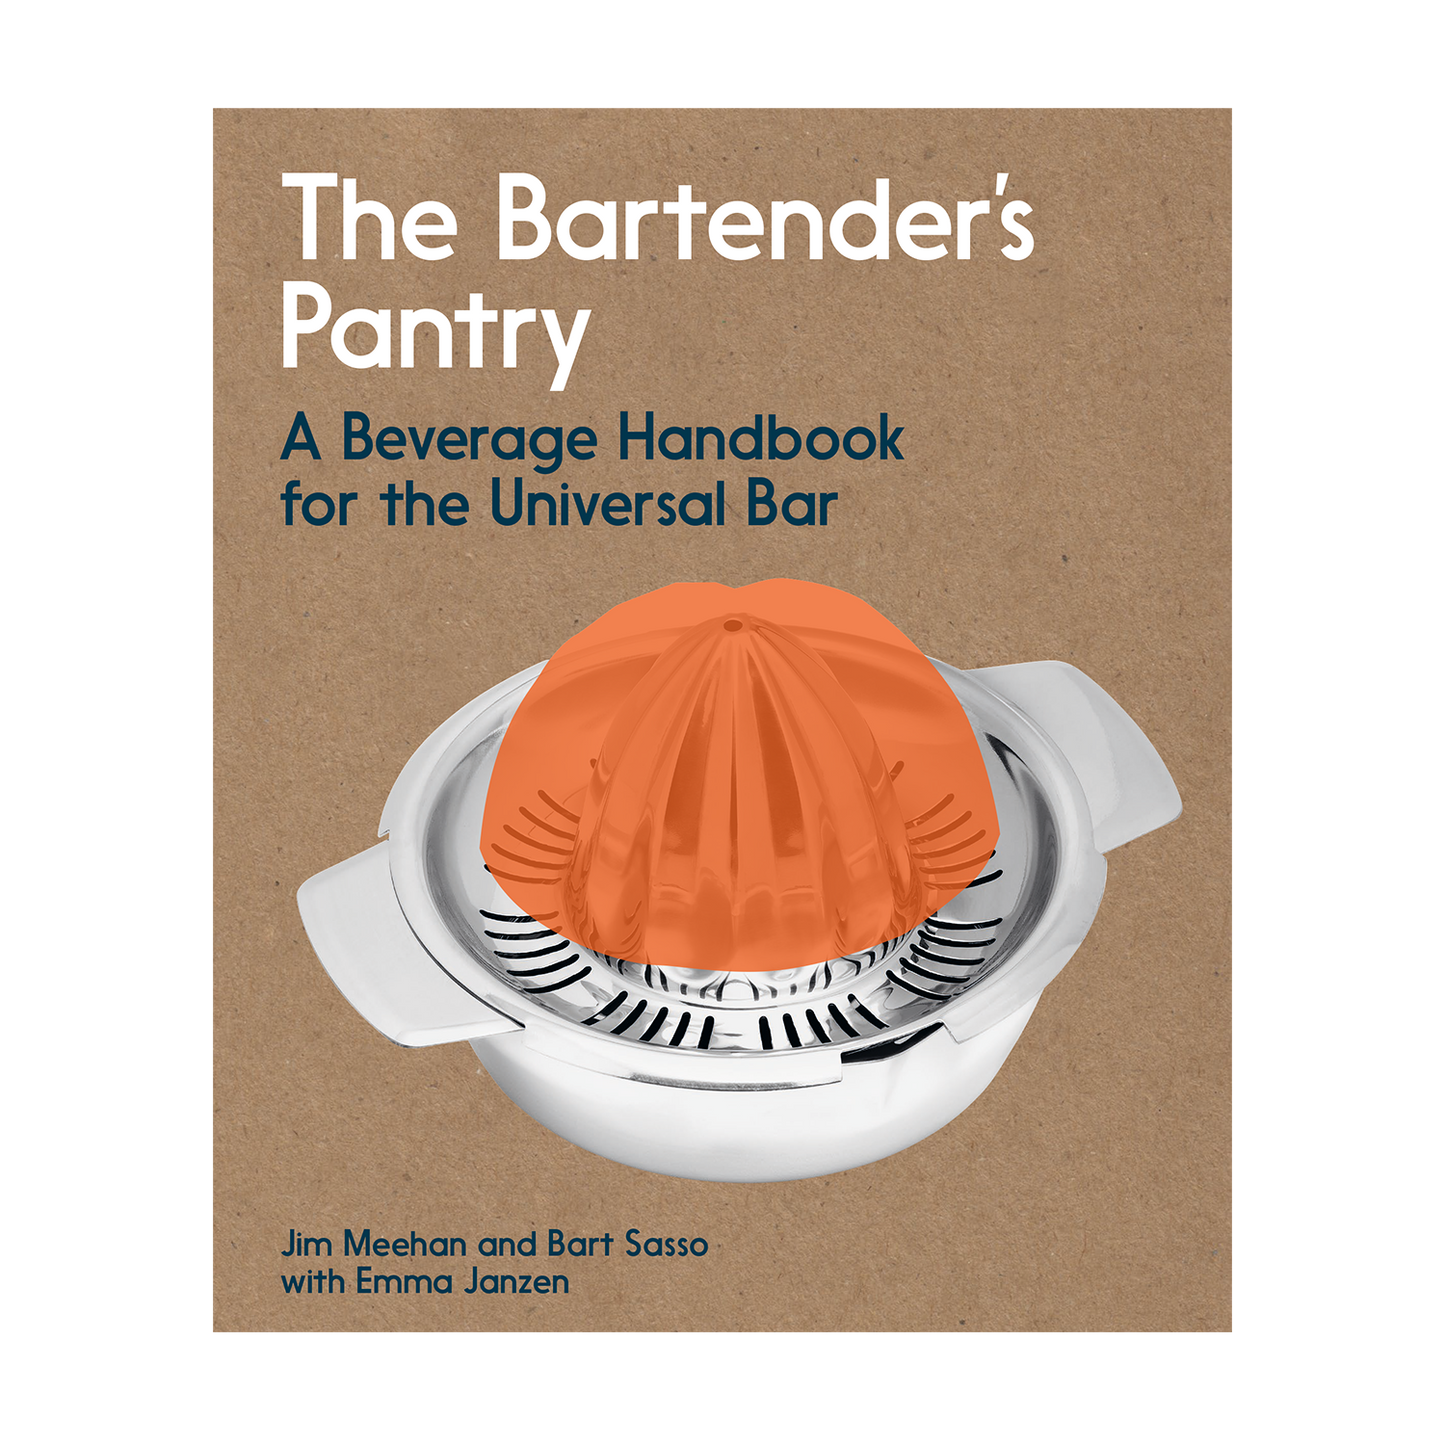 The Bartender's Pantry